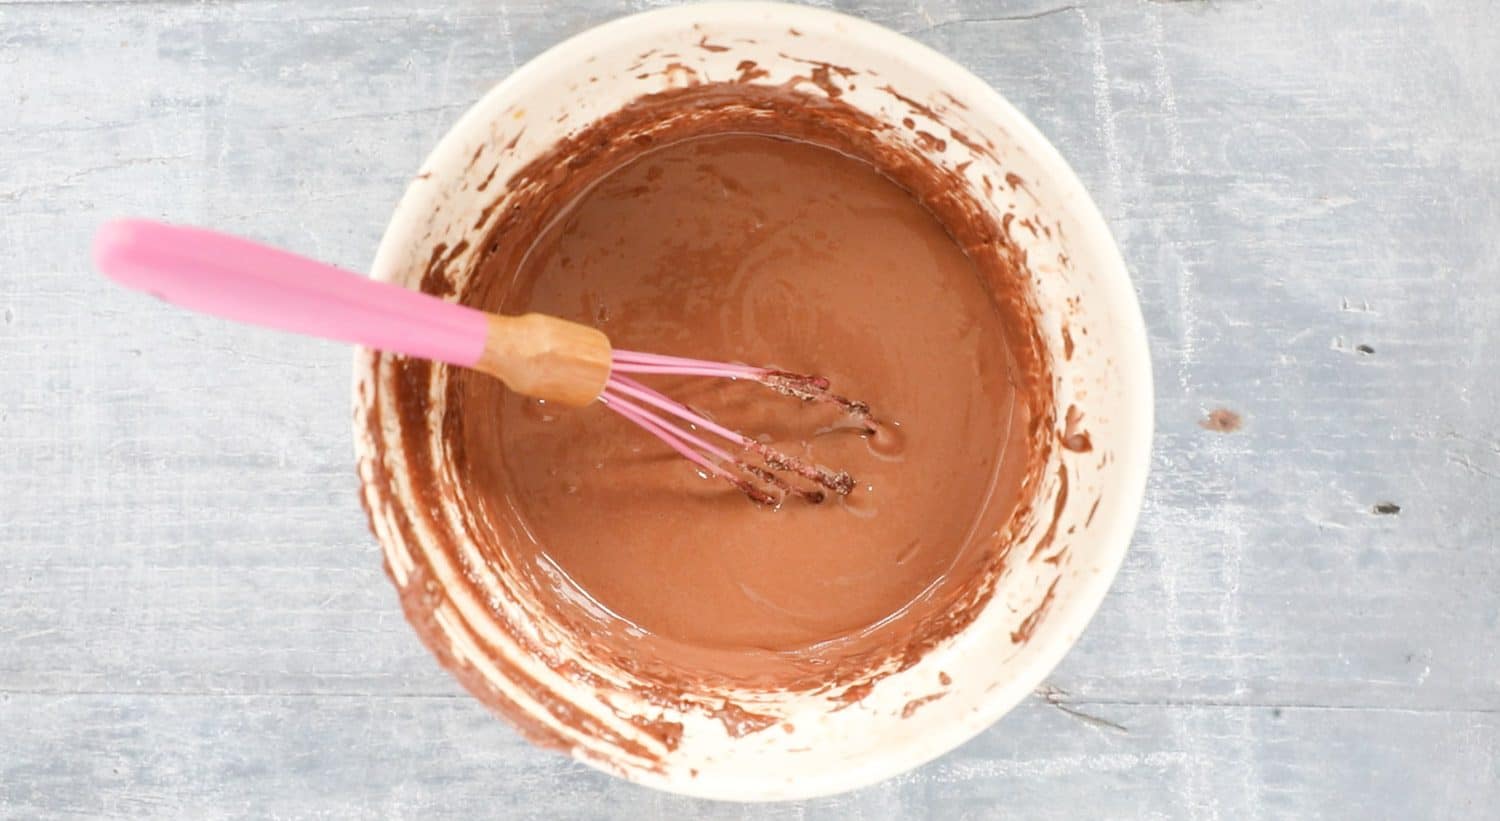 Chocolate poke cake mixture